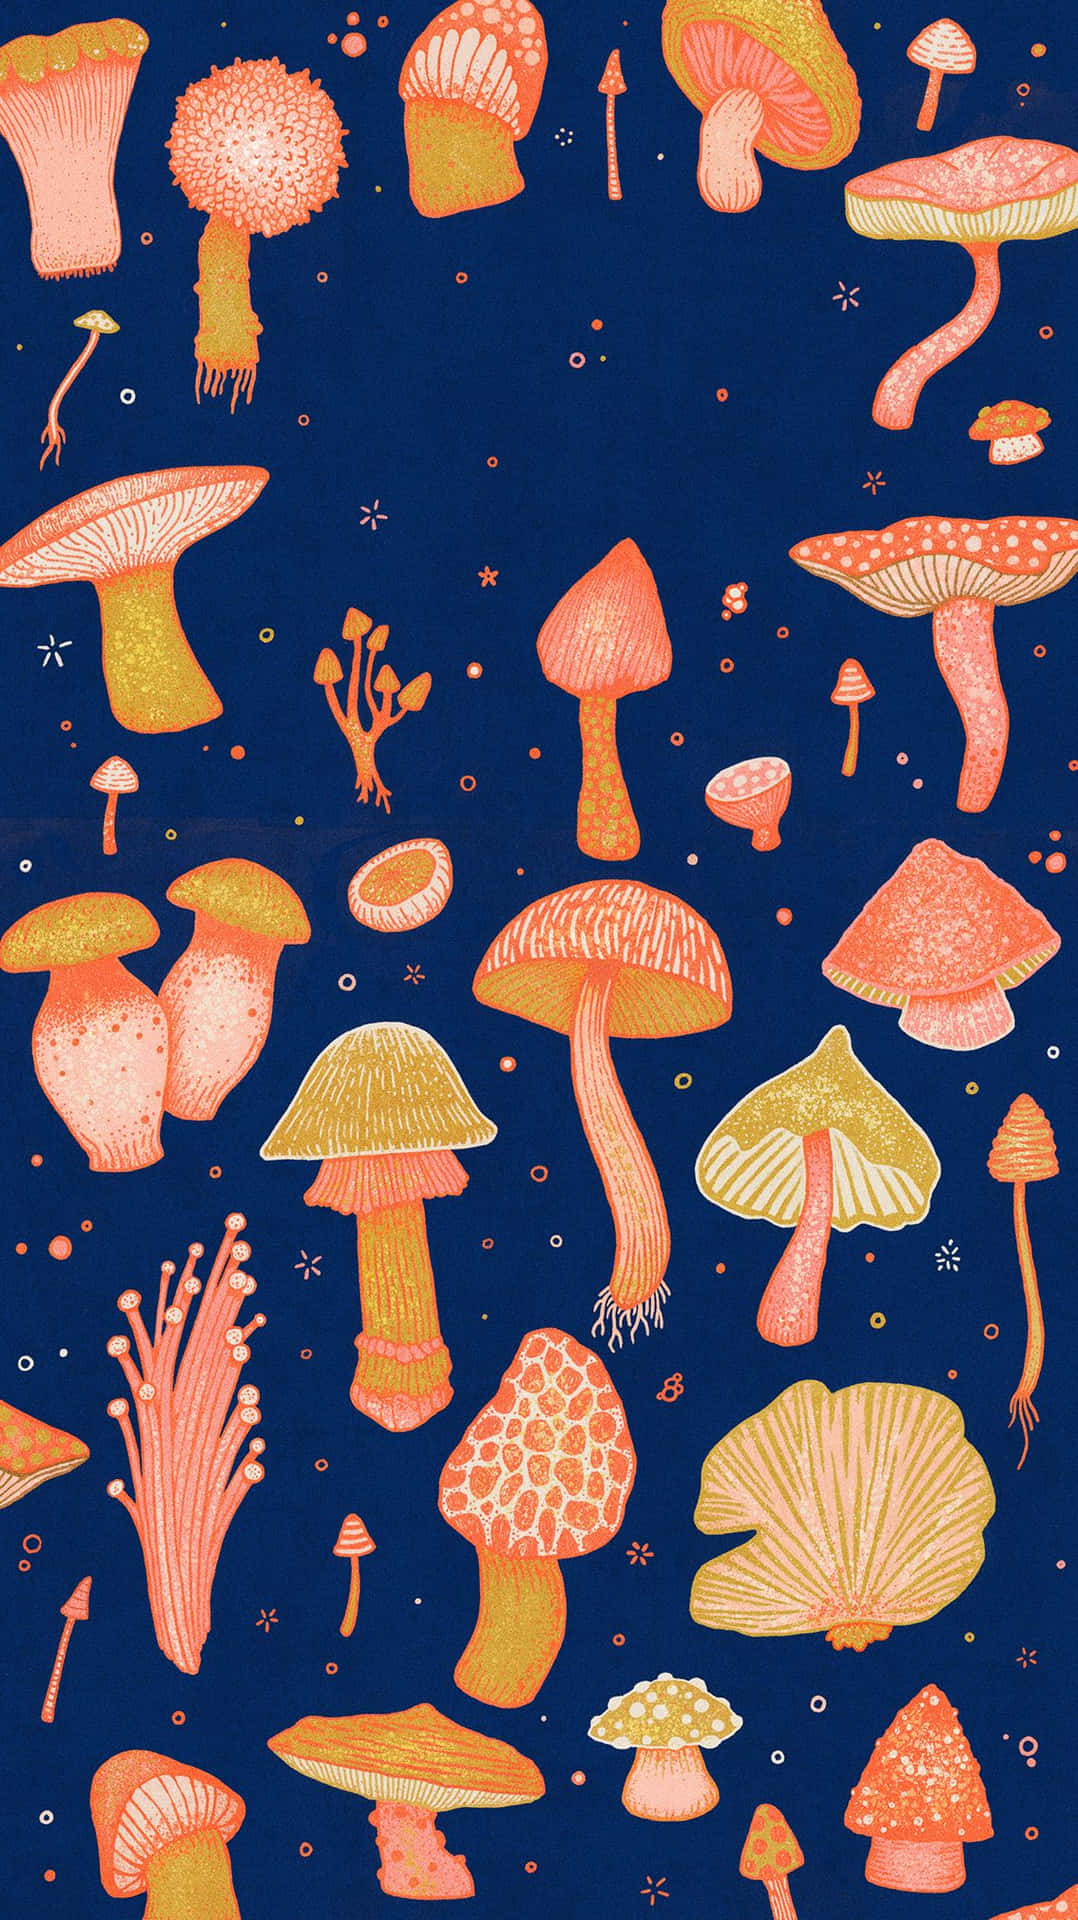 Telefon Mushroom 1134 X 2020 Wallpaper